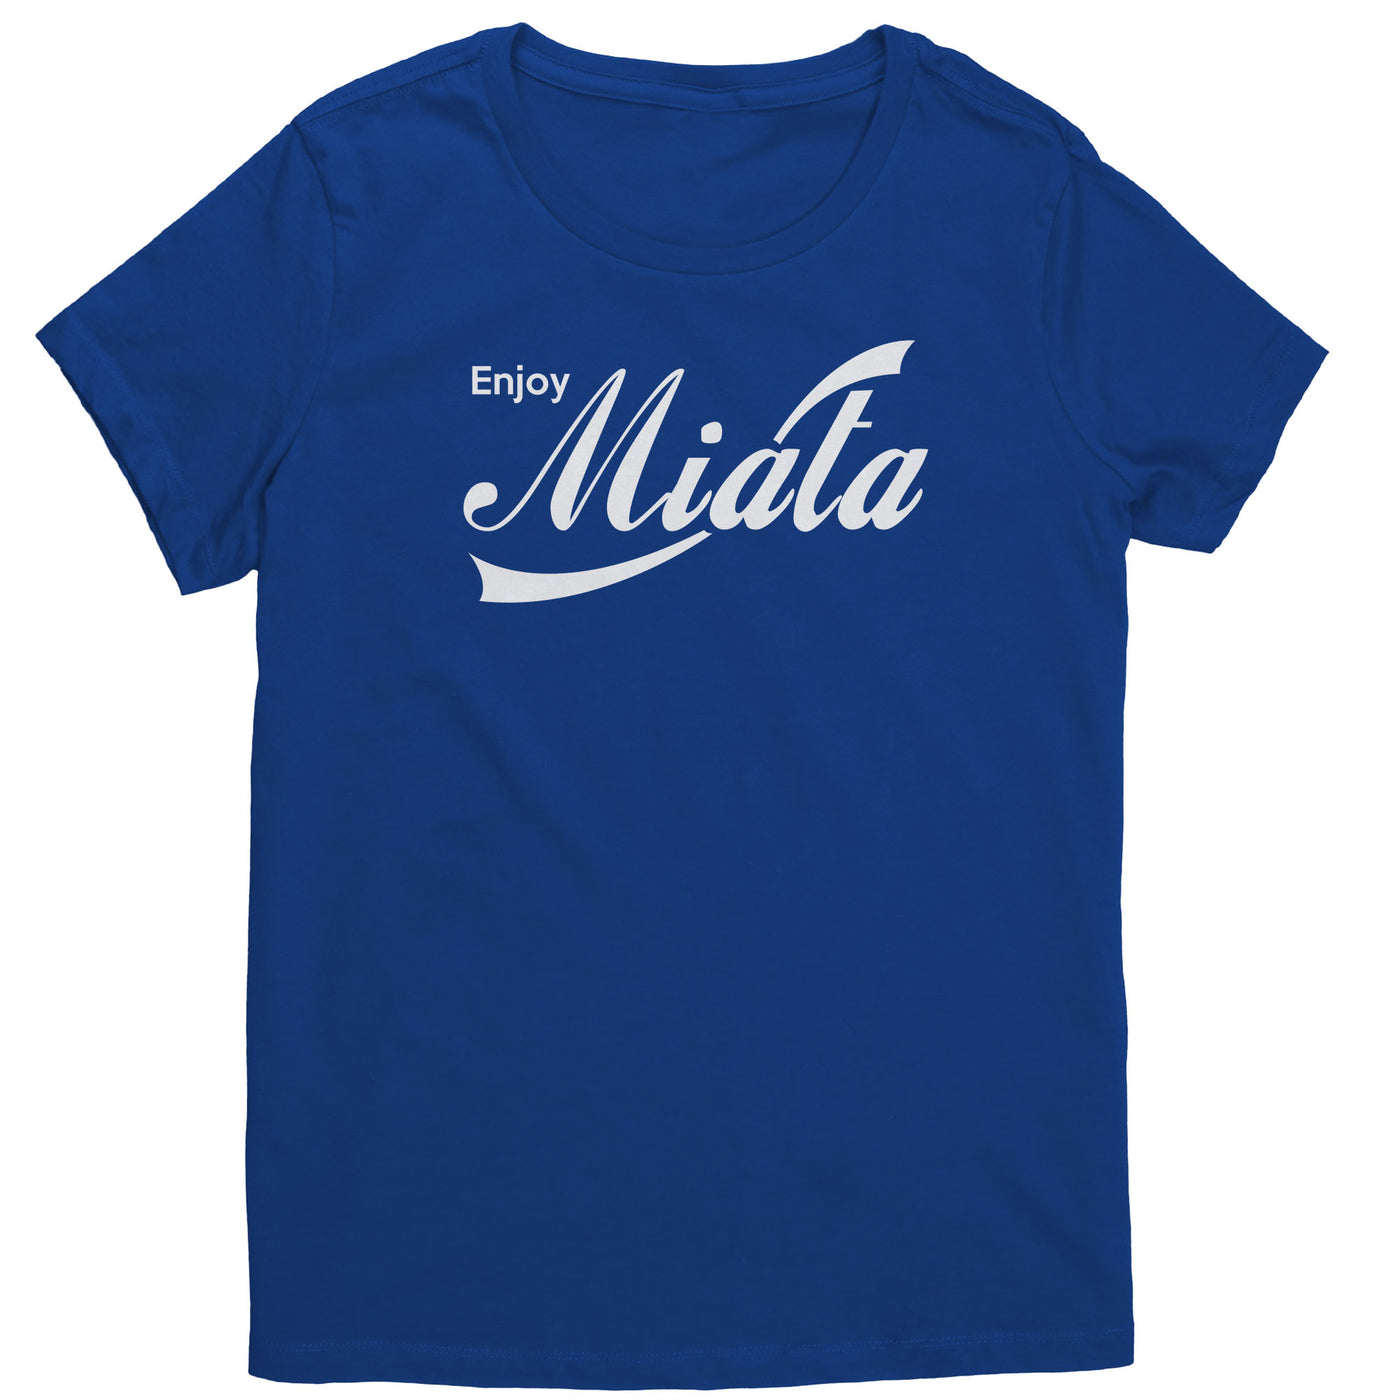 enjoy-miata-womens-shirt-blue